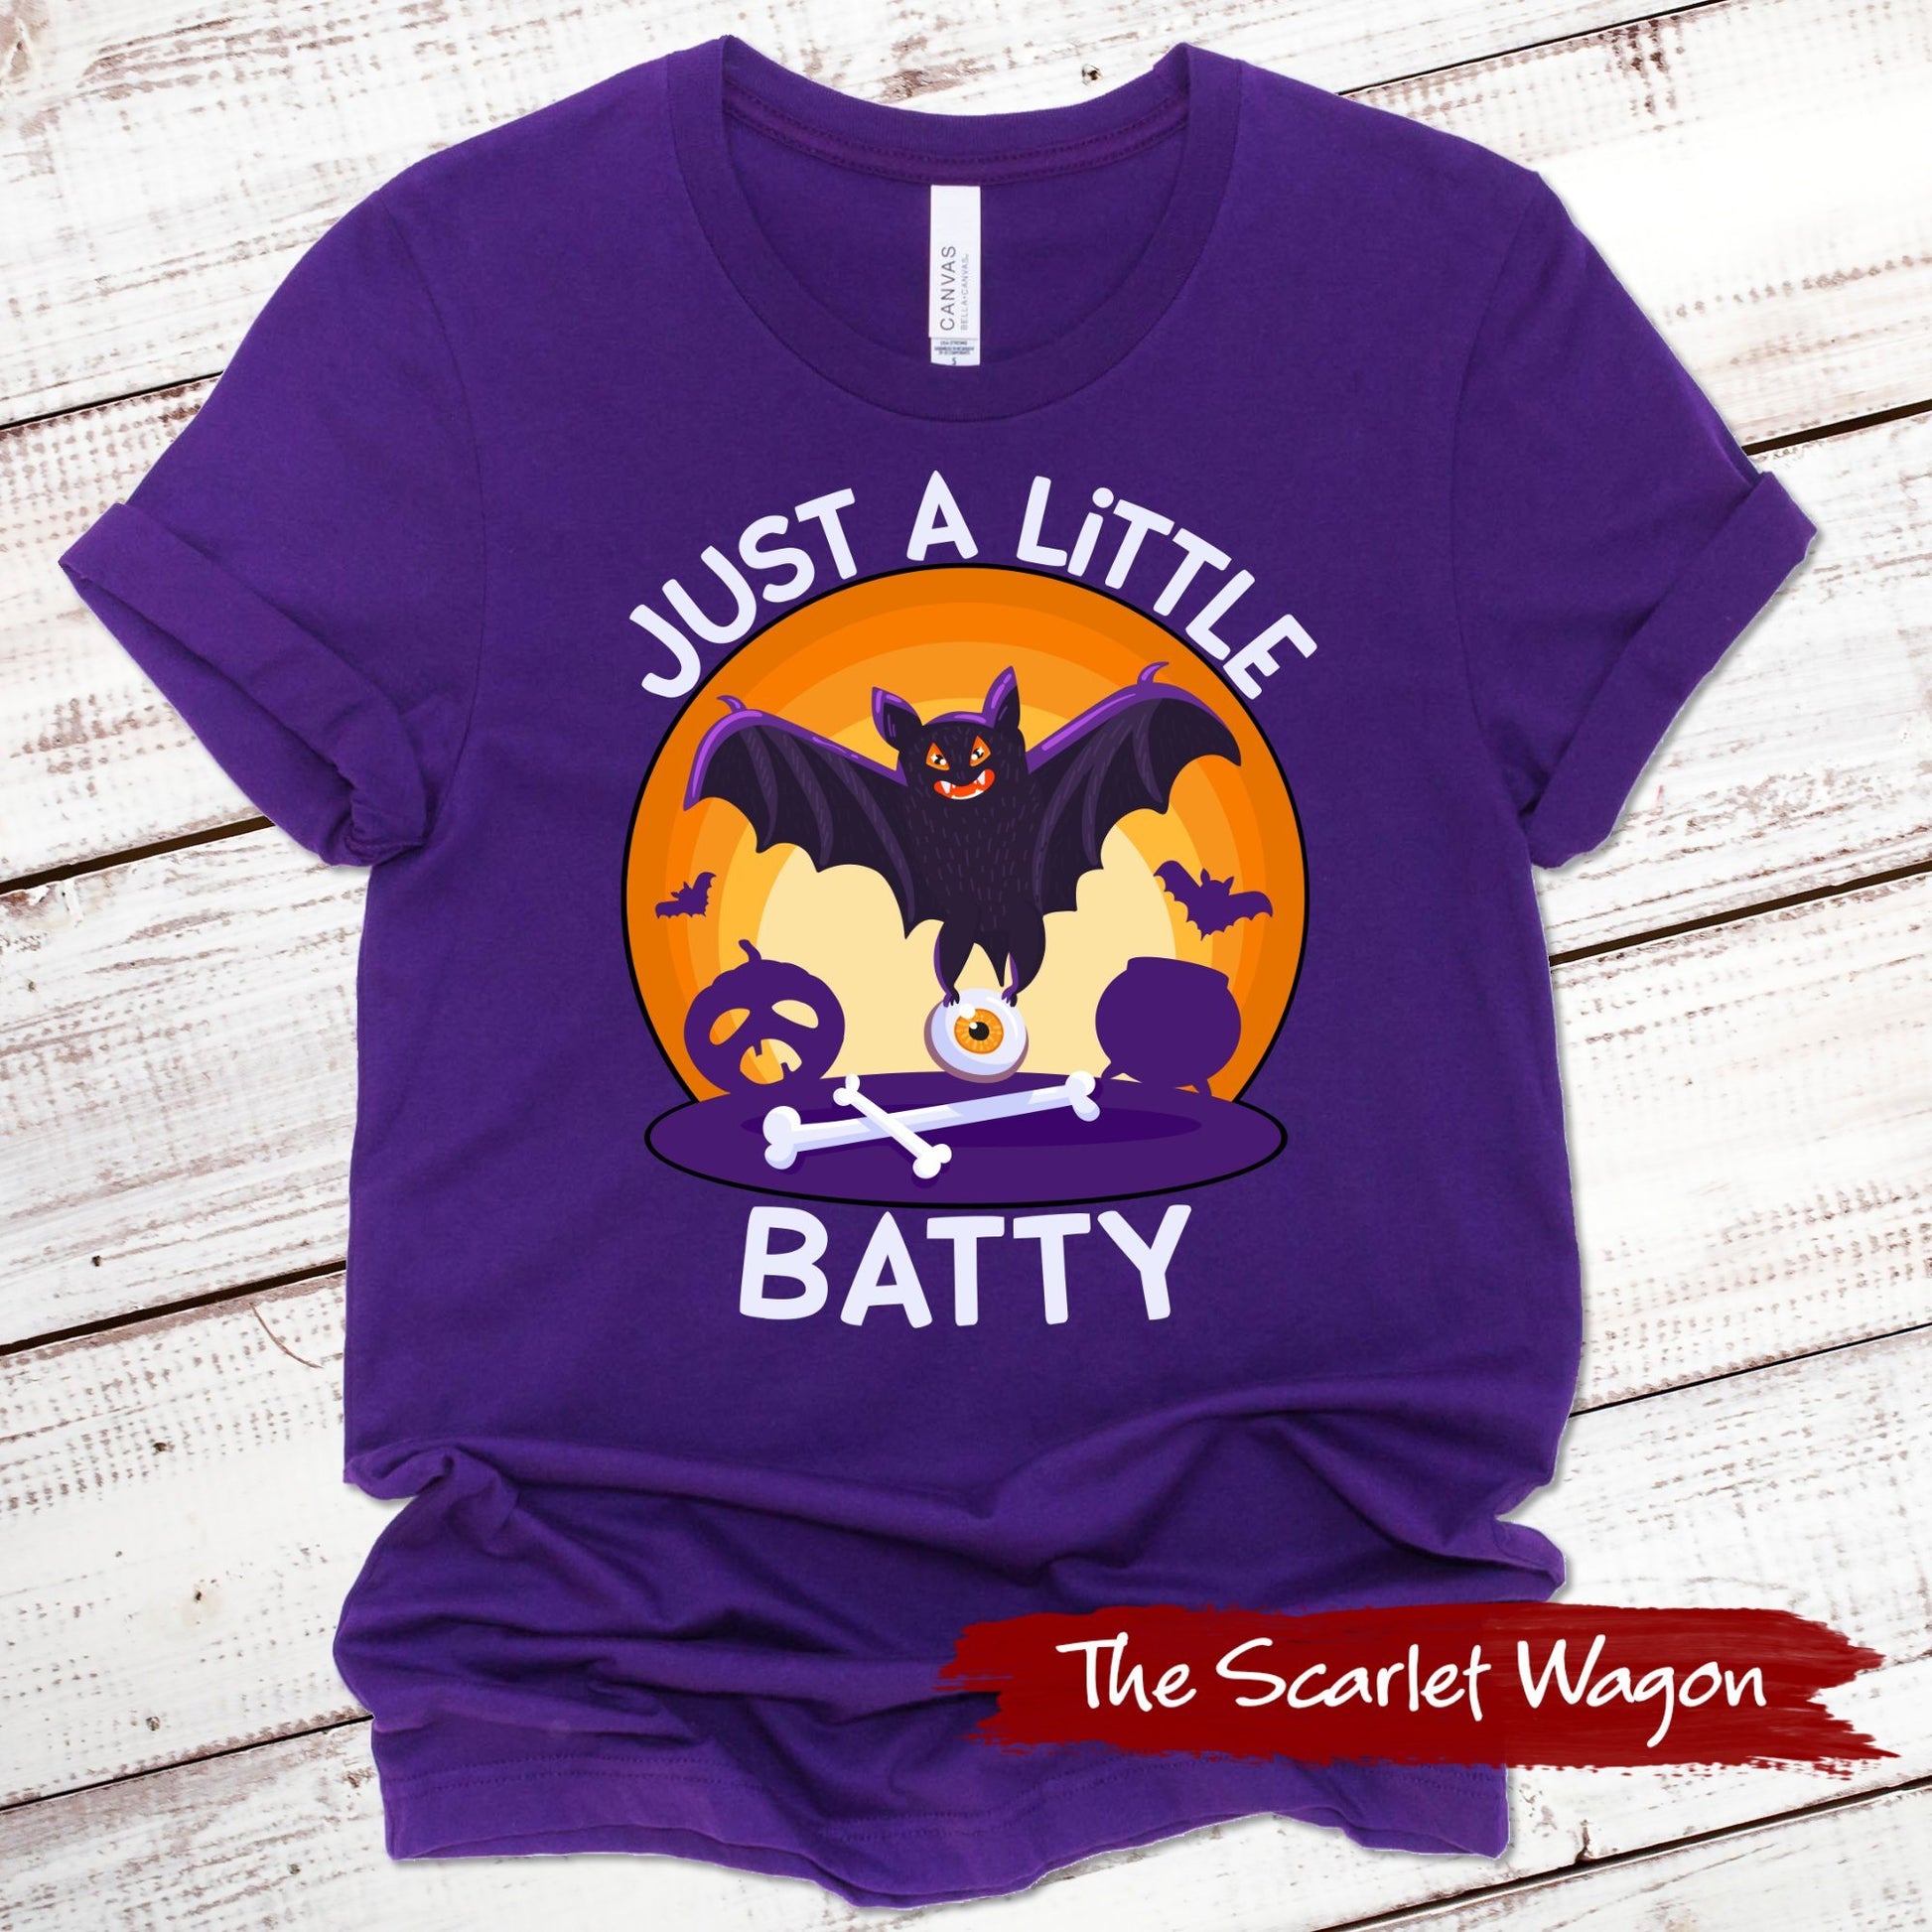 Just a Little Batty Halloween Shirt Scarlet Wagon Purple XS 